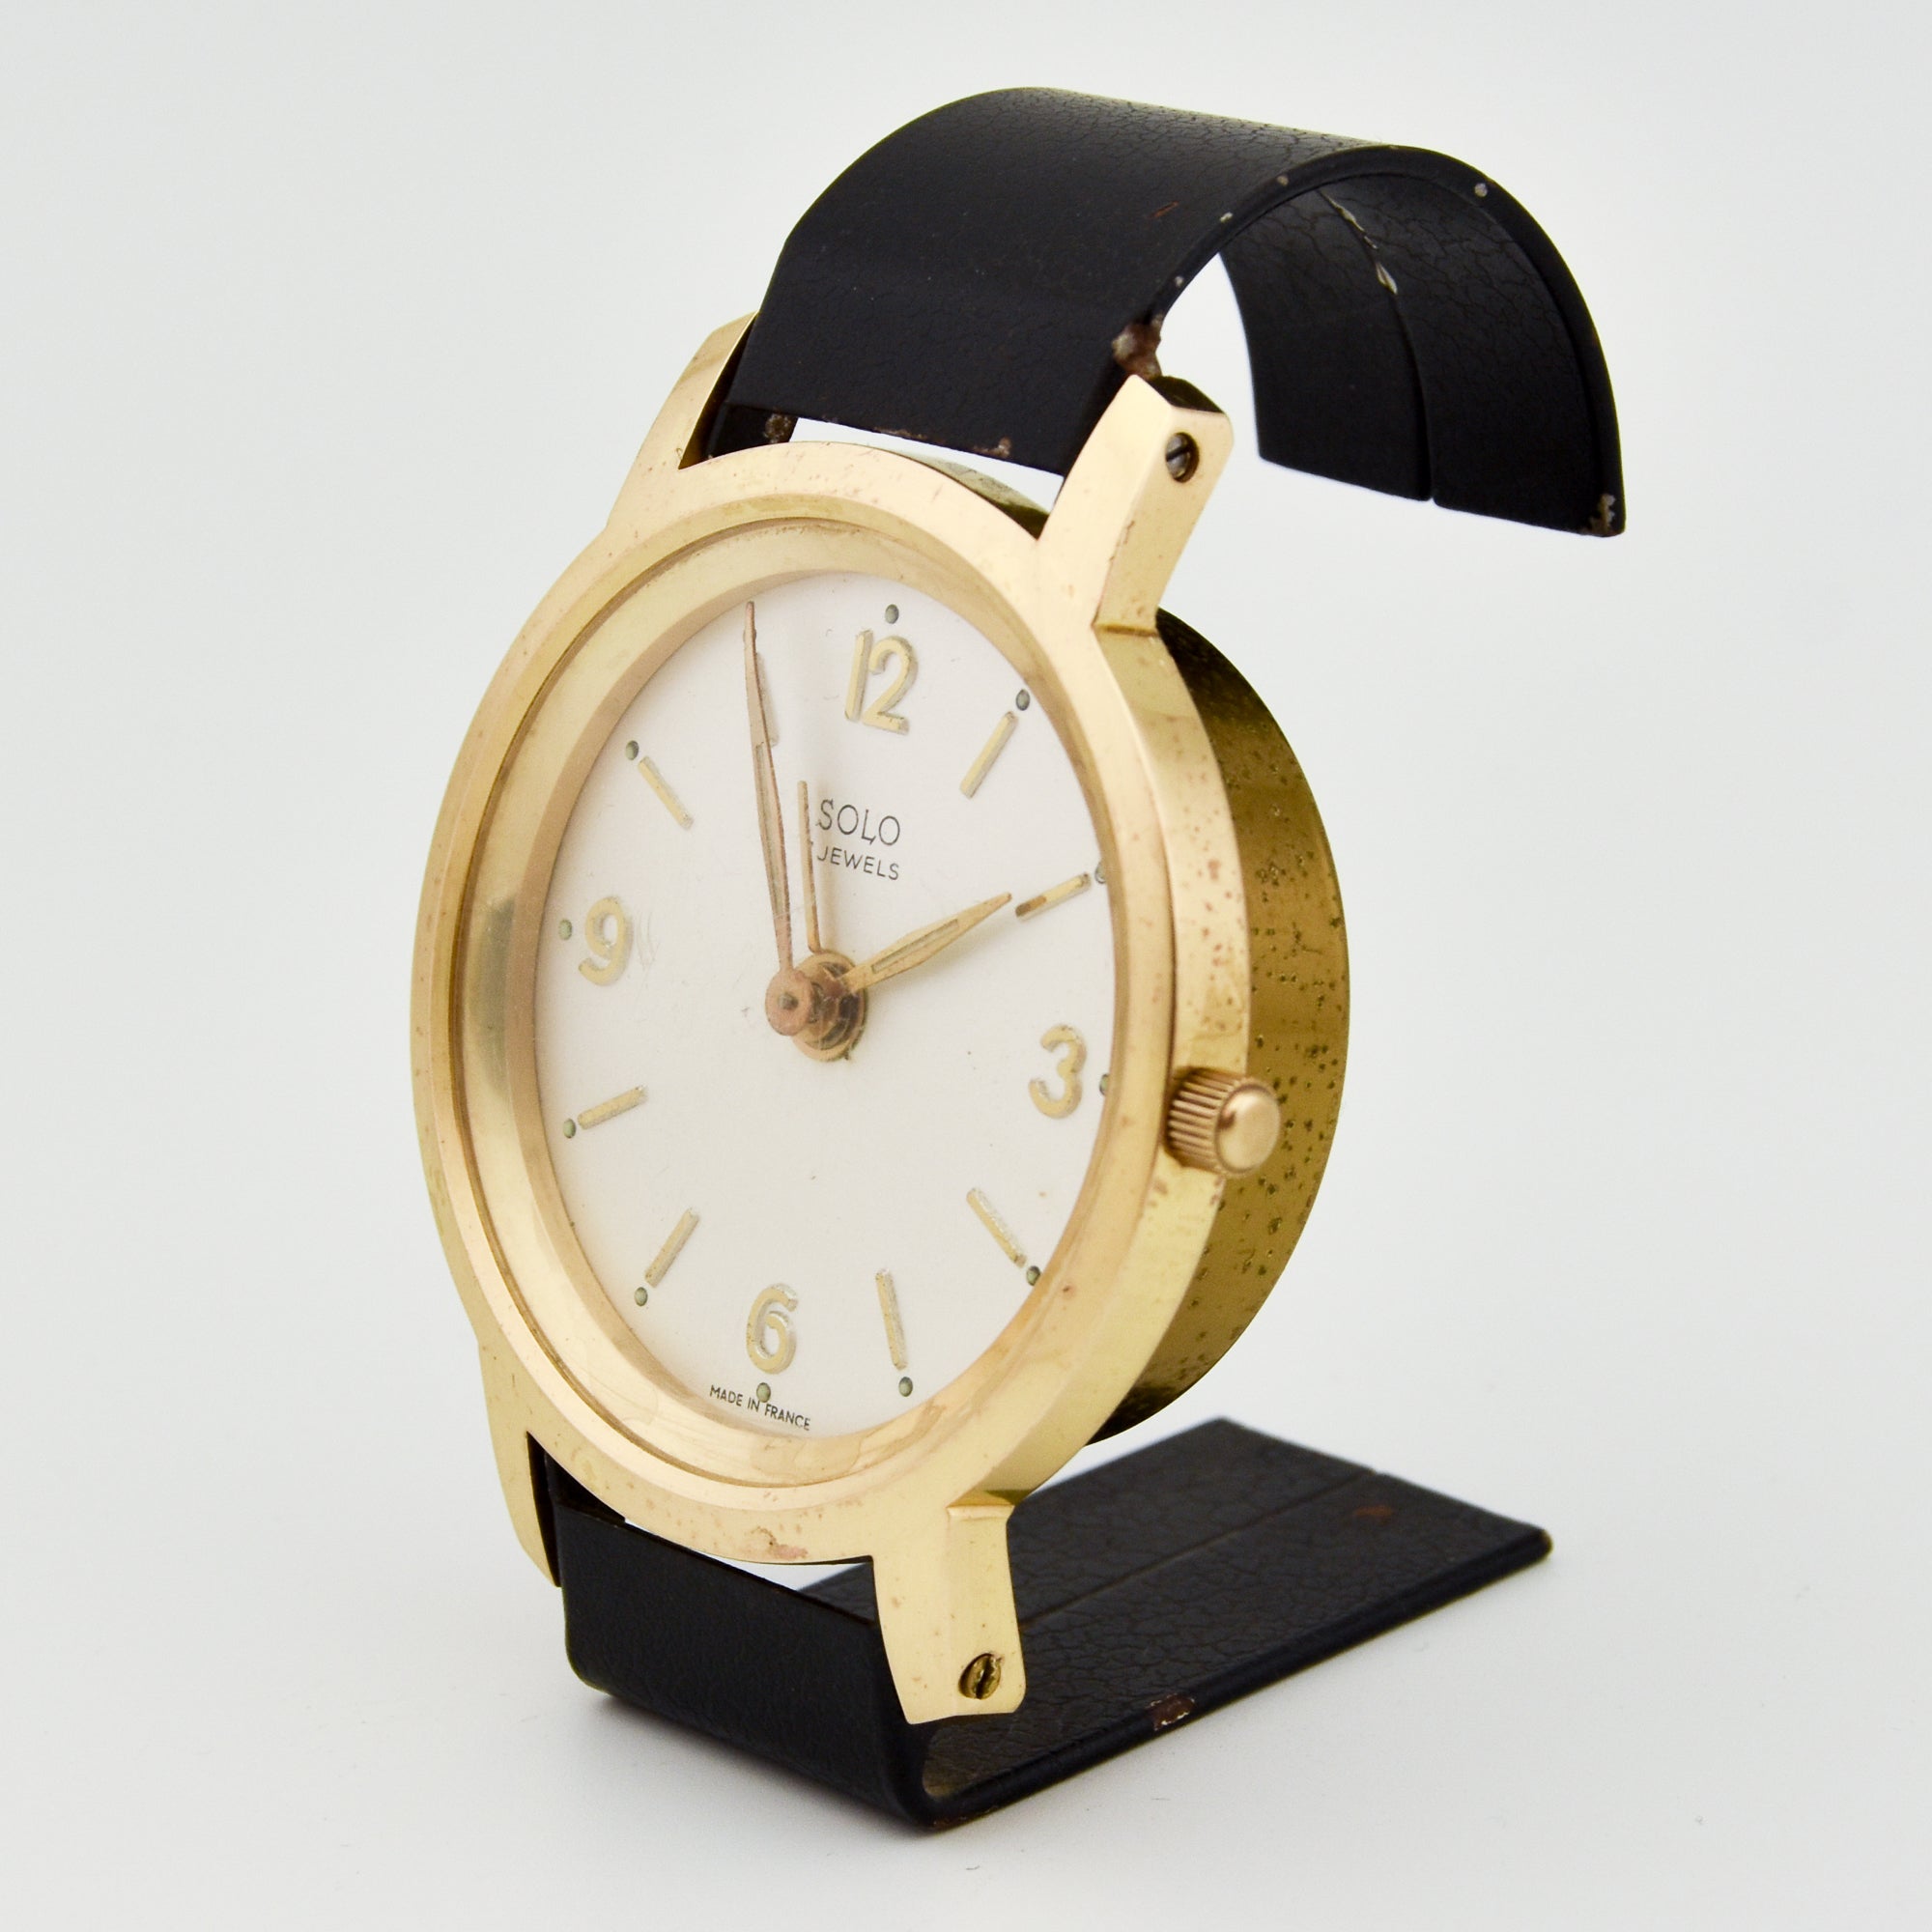 1960s French Watch Design Alarm-Desk Clock